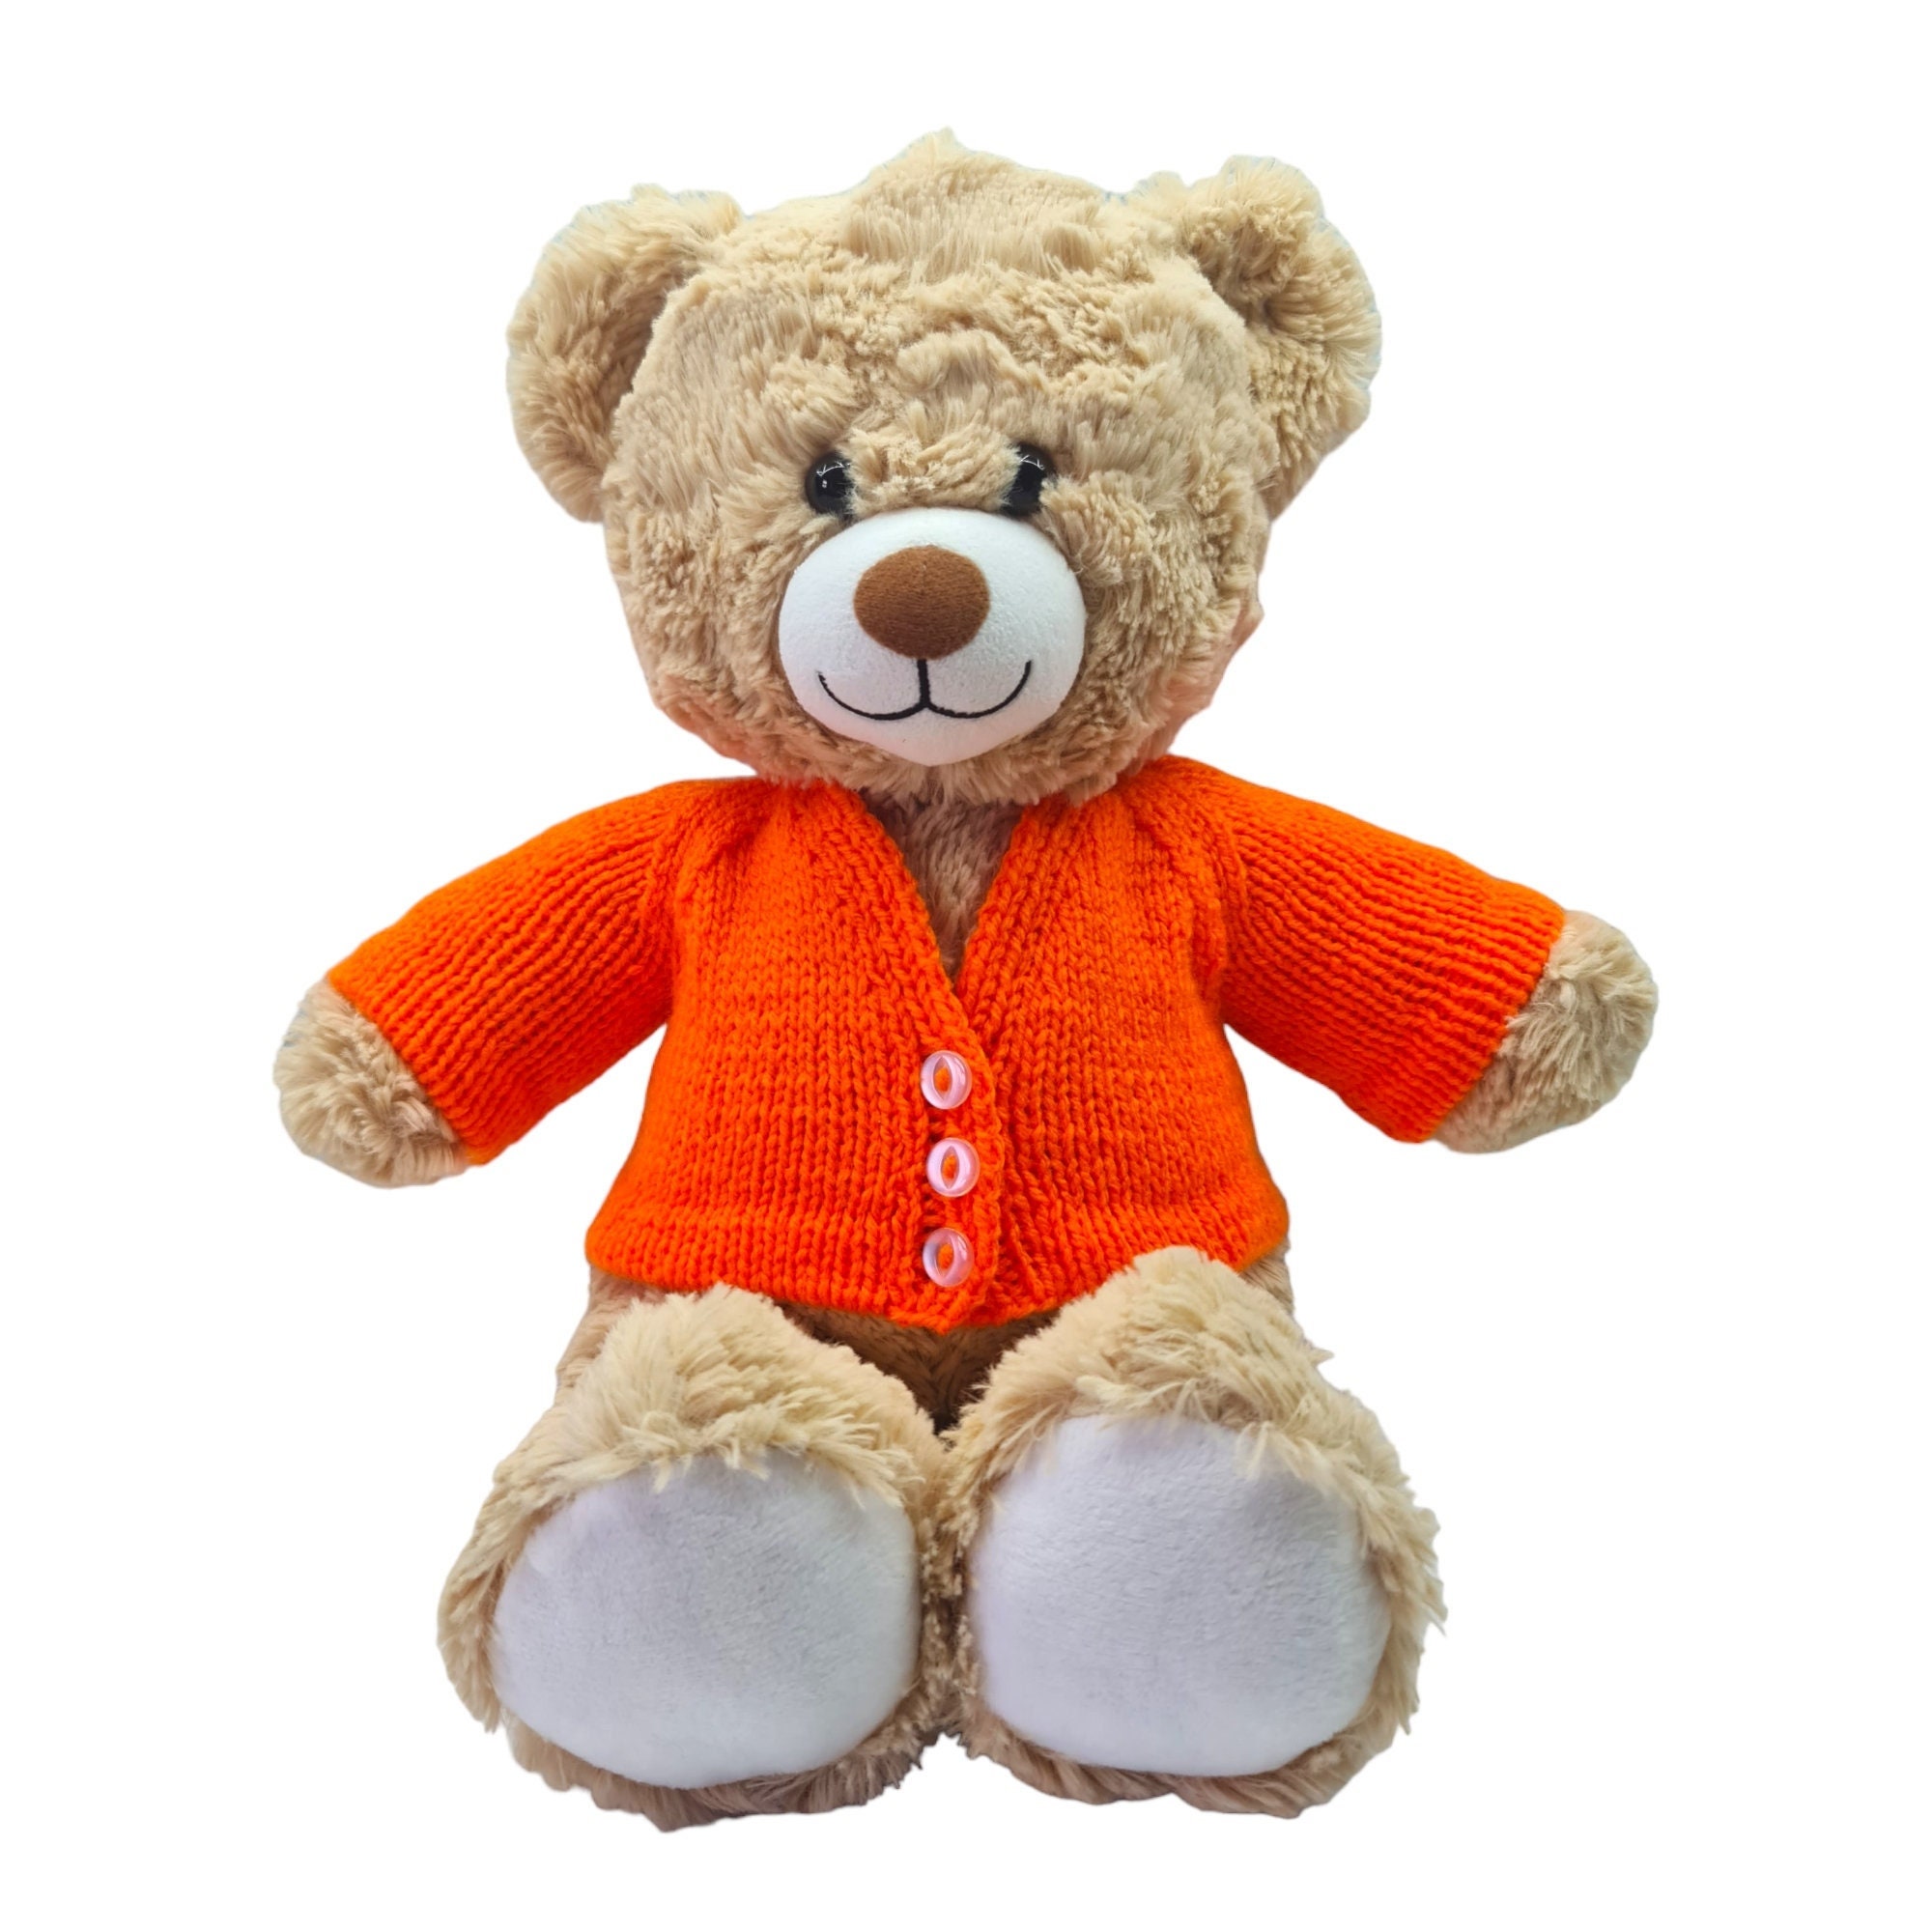 1 Pair 18mm Article V Plastic Safety Eyes Round Pupils Teddy Bear Doll  Puppet Plush Toy Stuffed Animal Plushie Craft